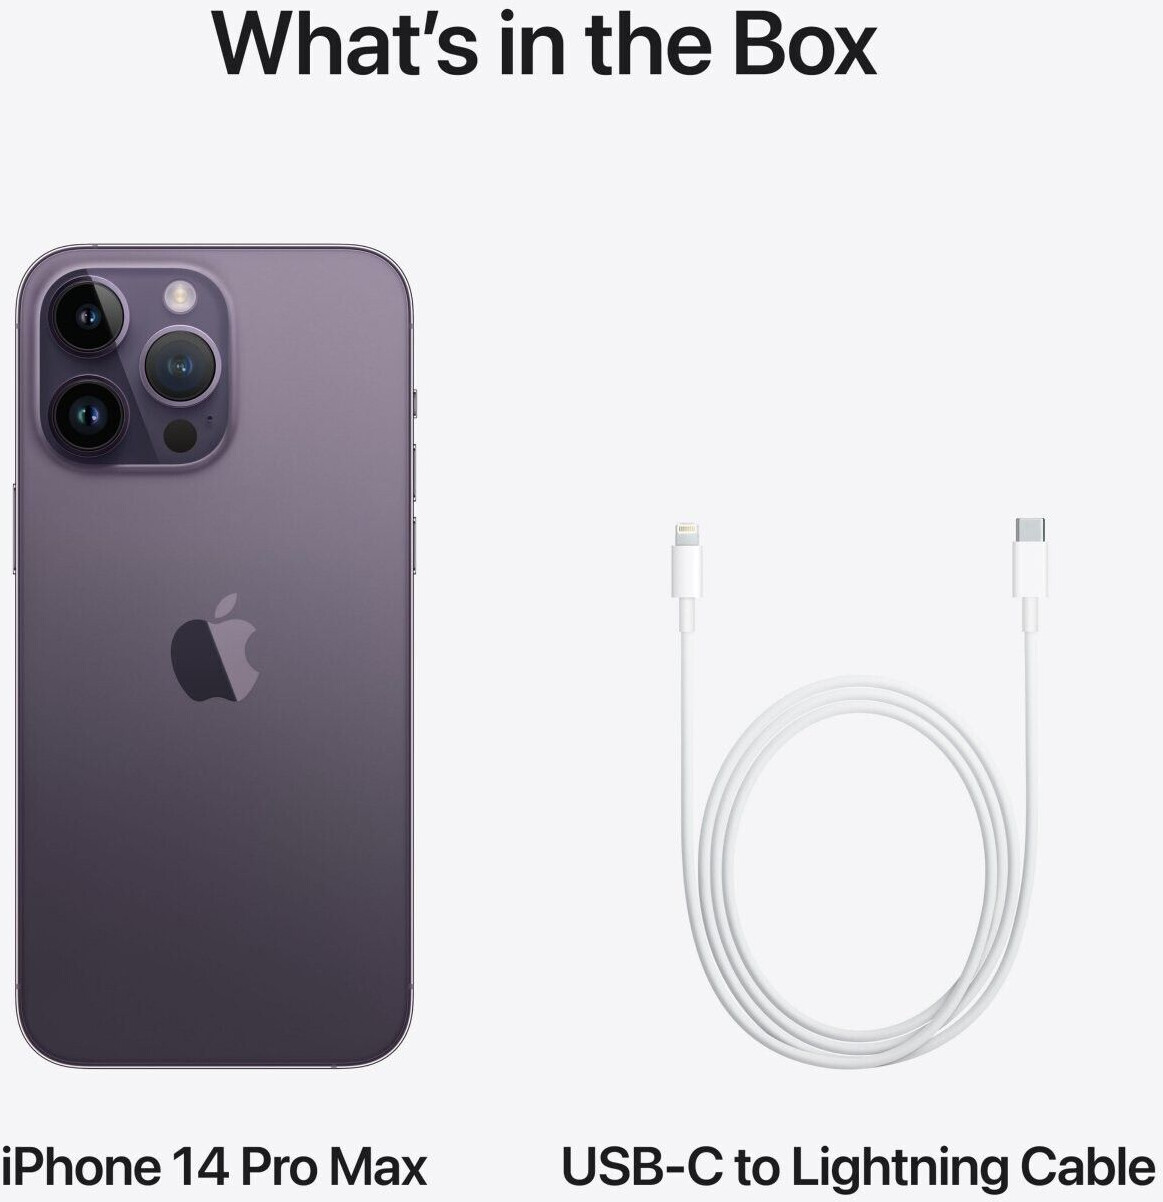 iPhone 14 Pro Max 512 Go, Violet intense - Apple